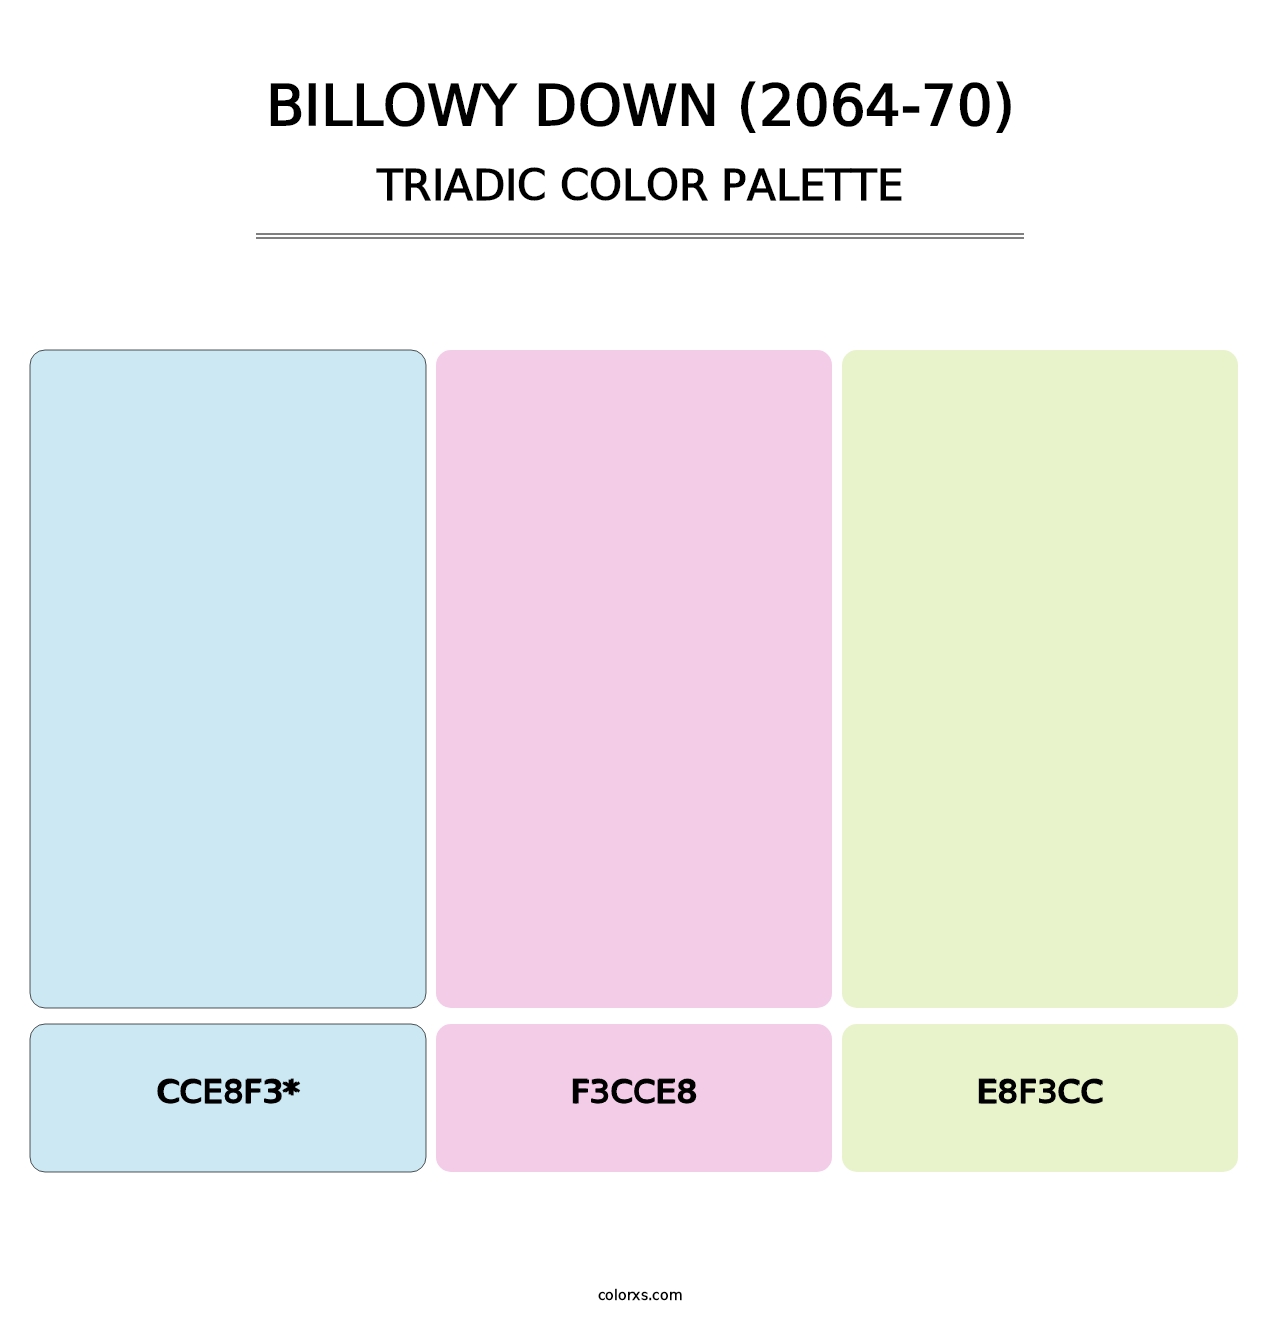 Billowy Down (2064-70) - Triadic Color Palette